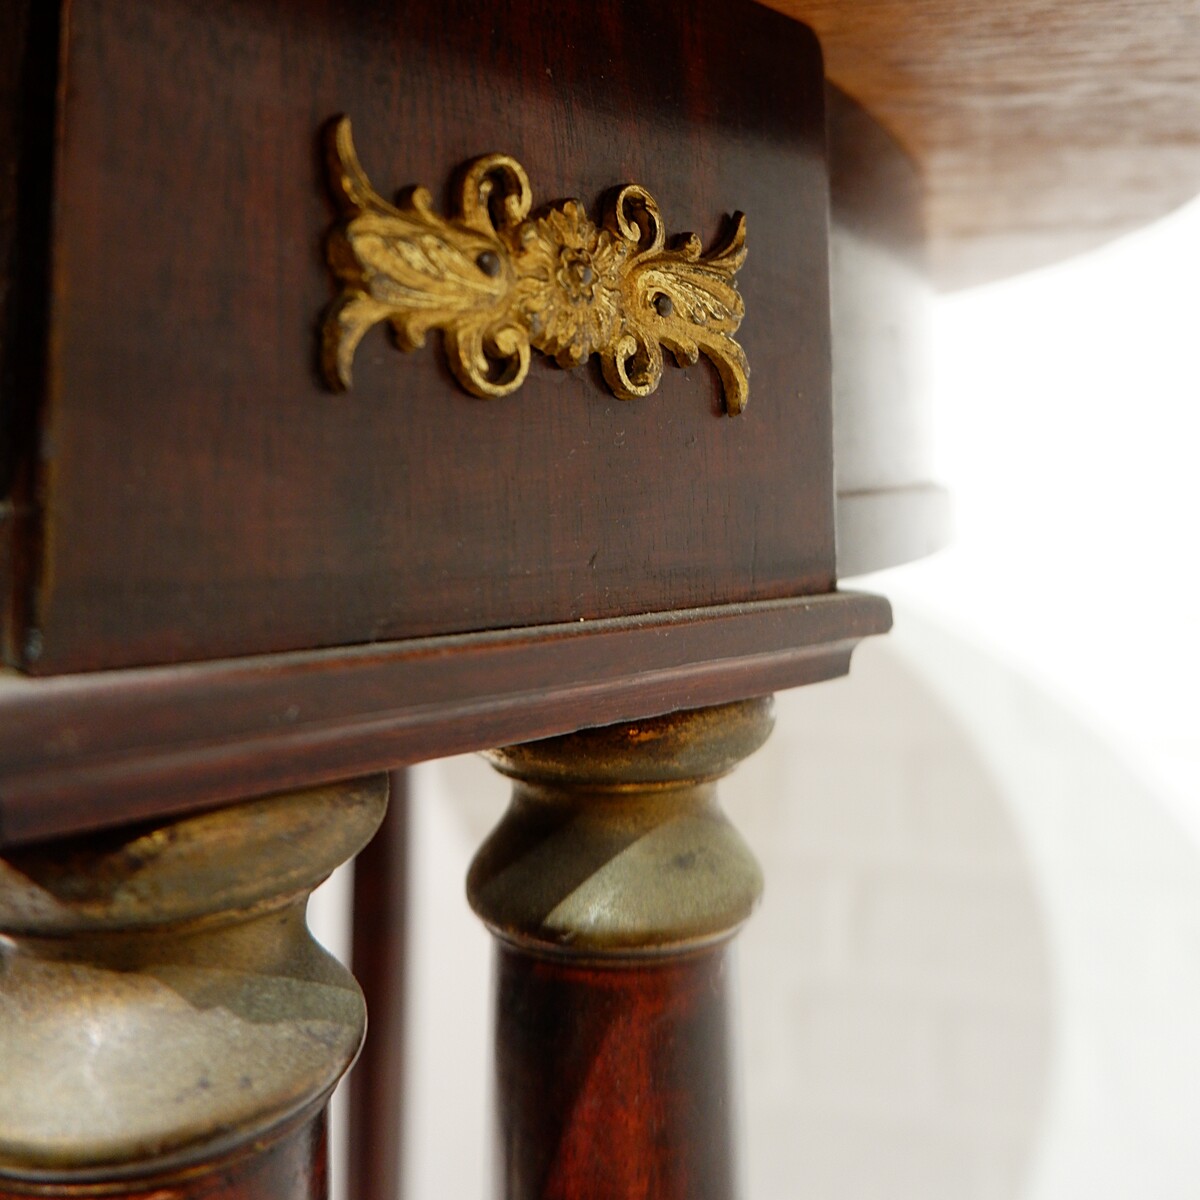 Mahogany tripod Pedestal table 